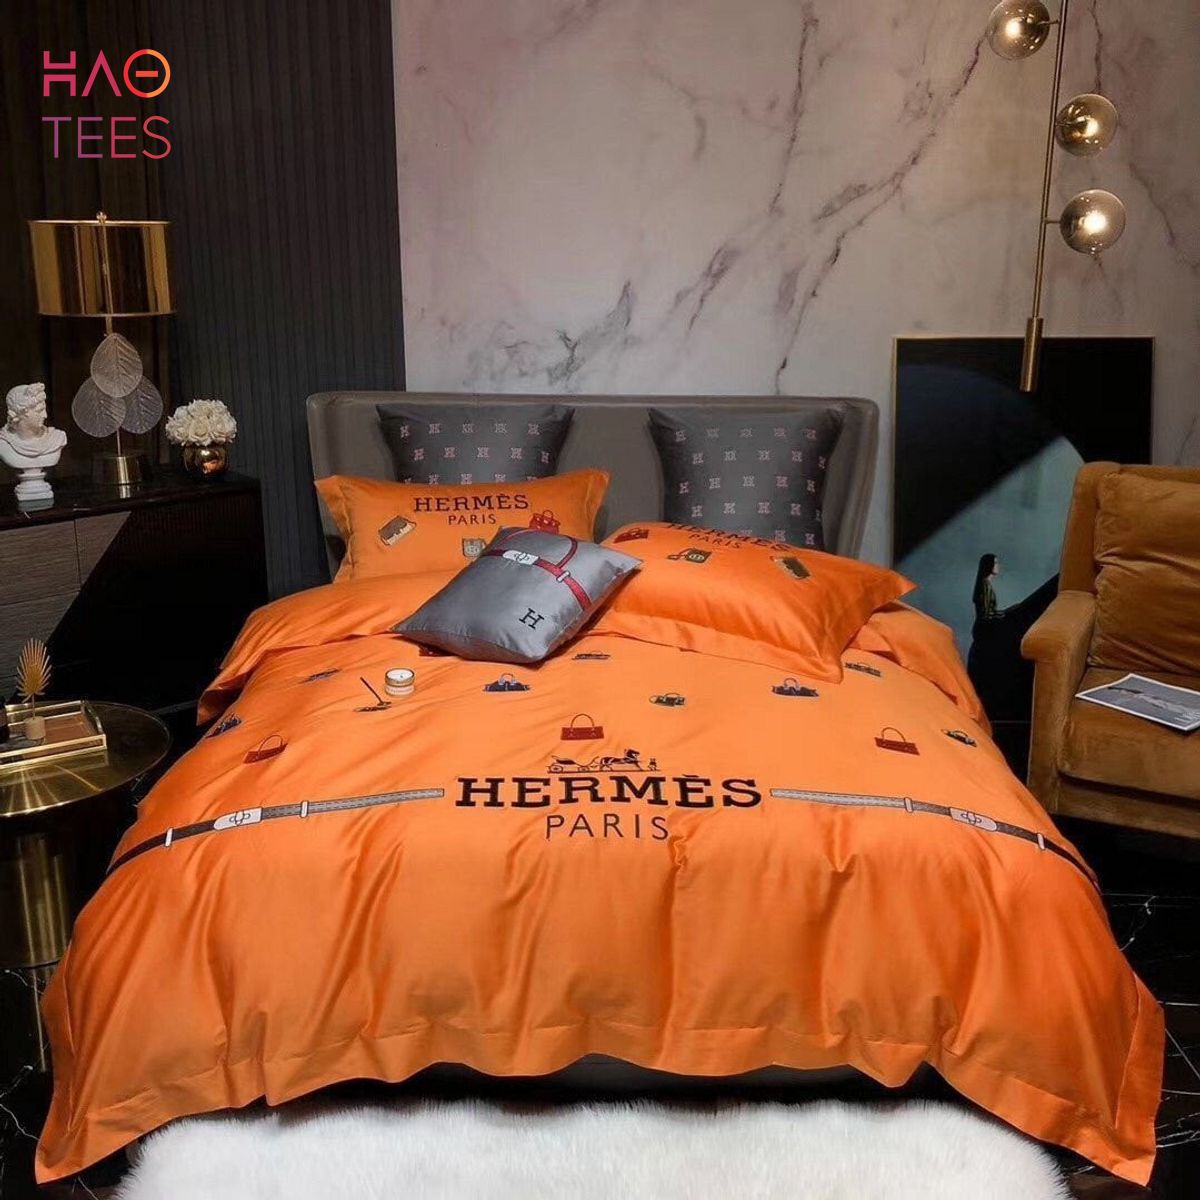 HOT Hermes French Limited Edition Orange Bedding Sets